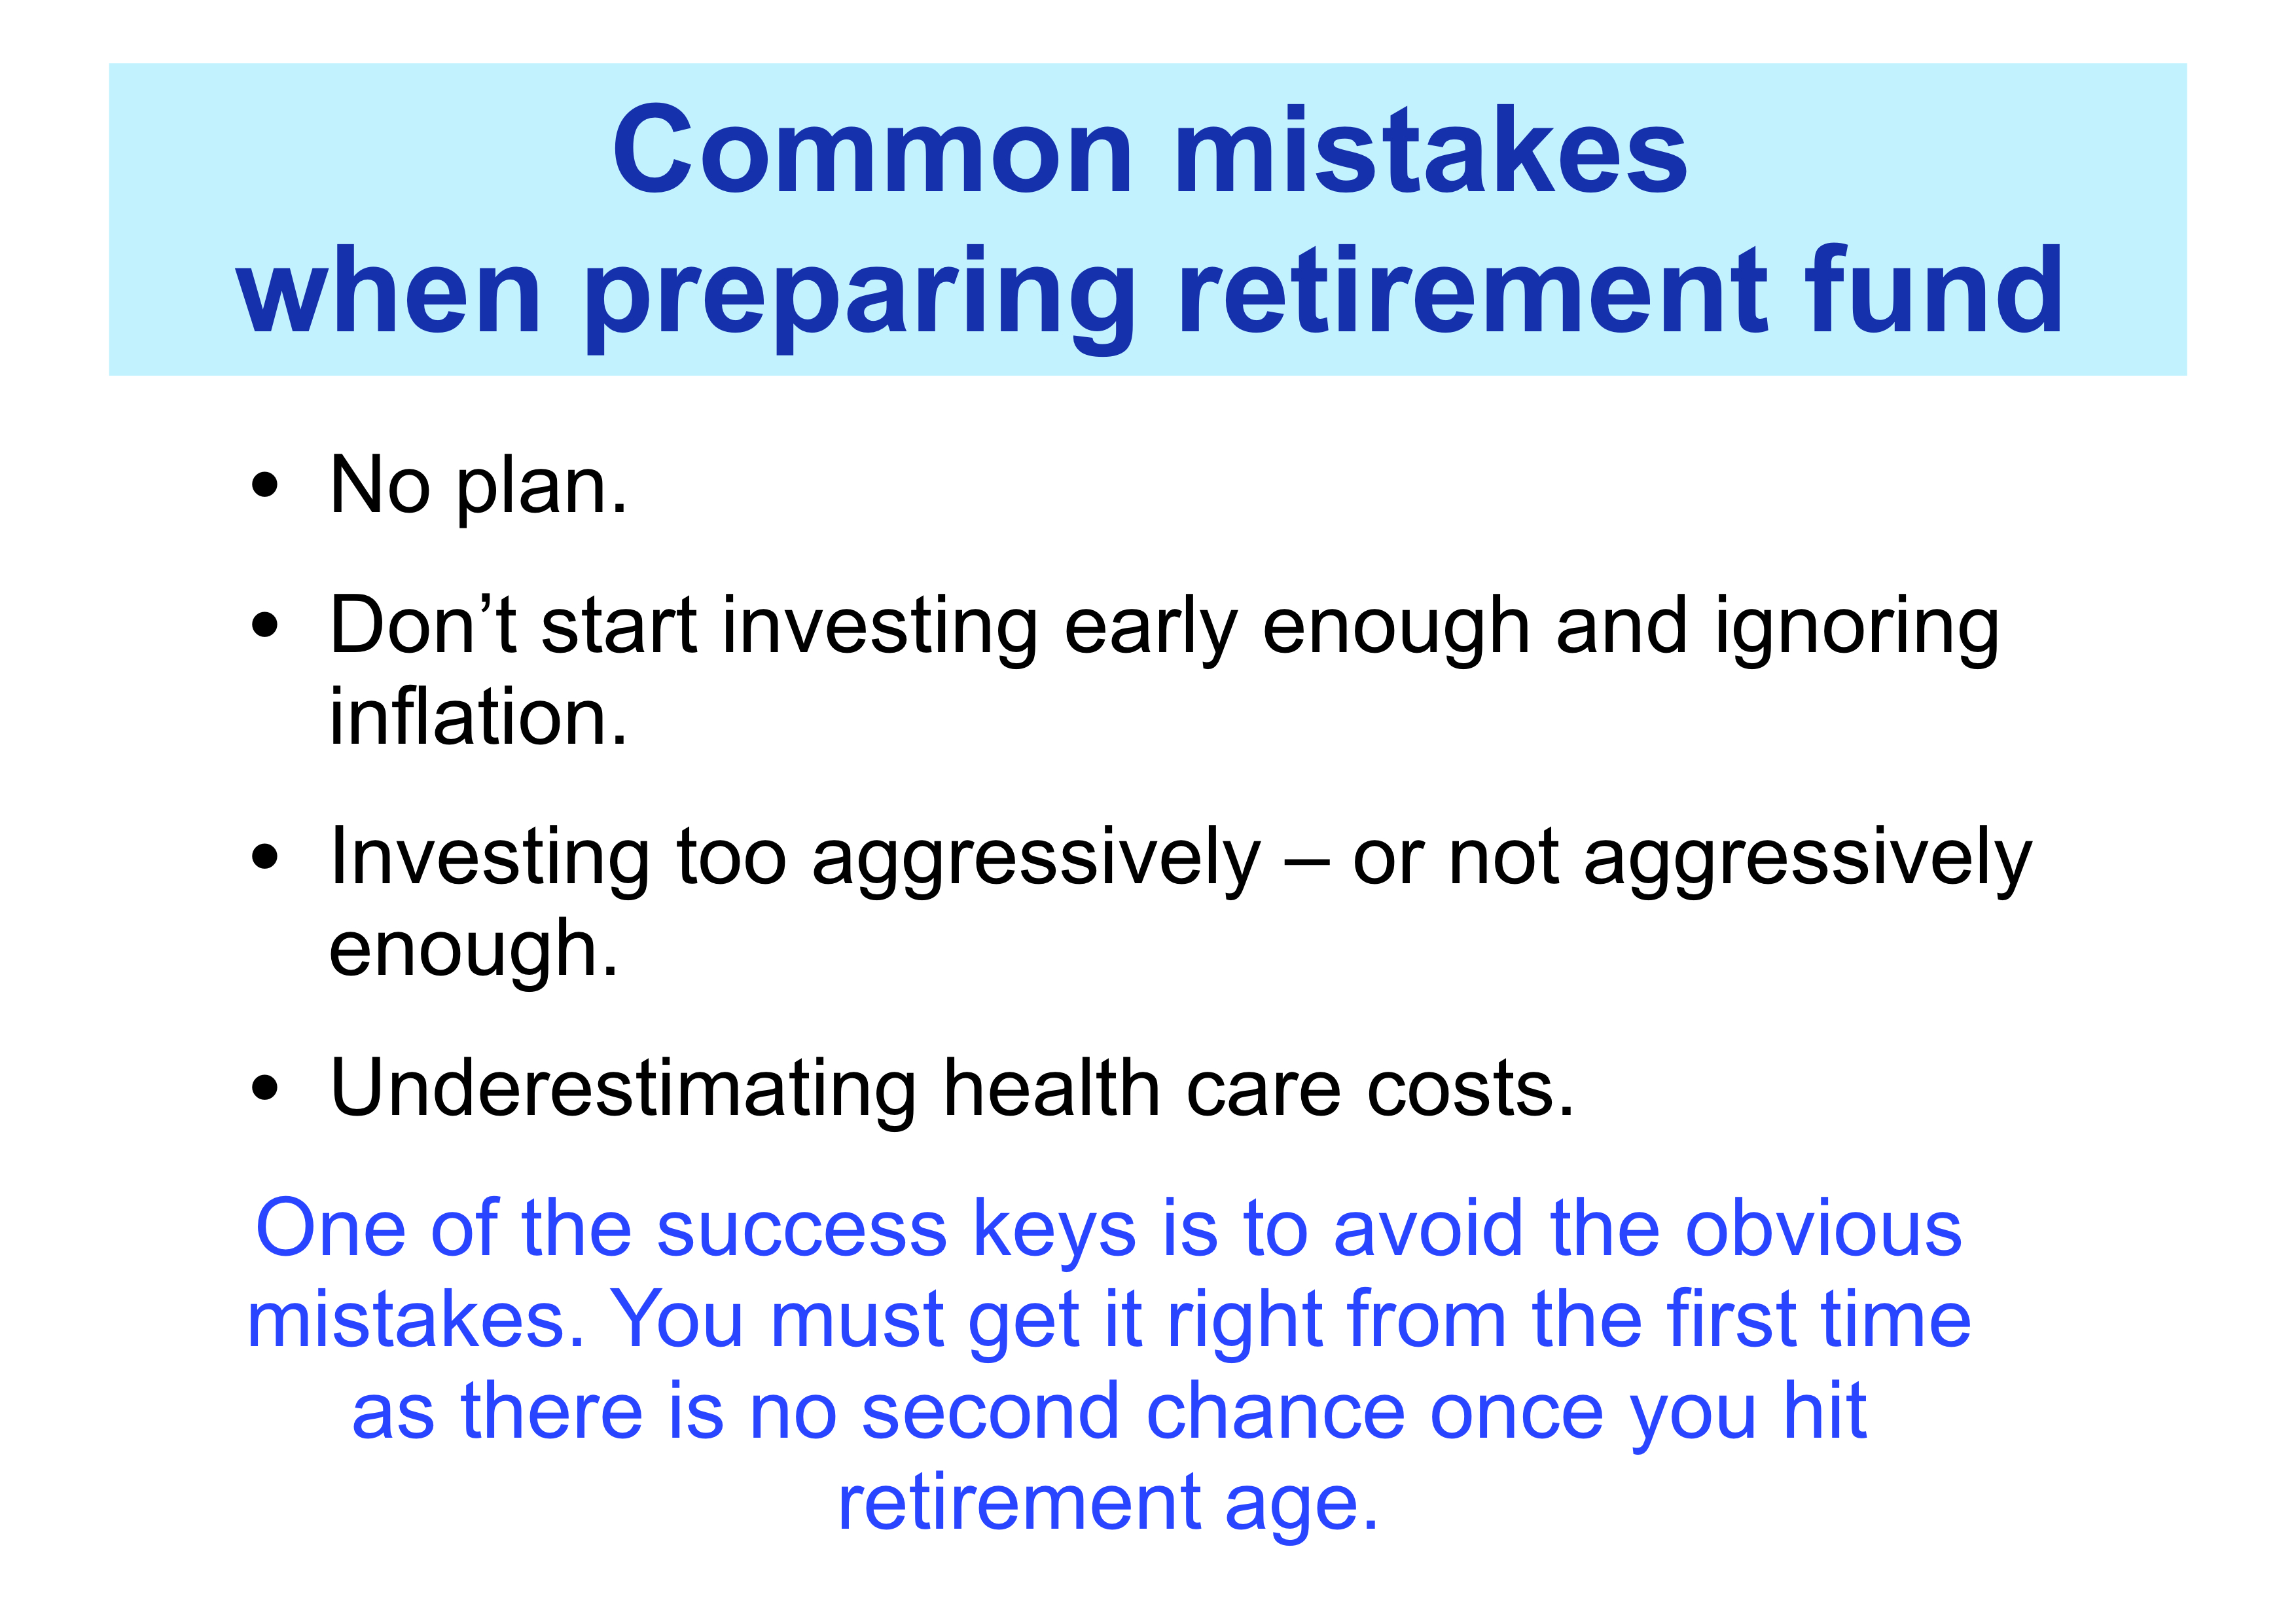 Common Mistakes when Preparing Retirement Fund